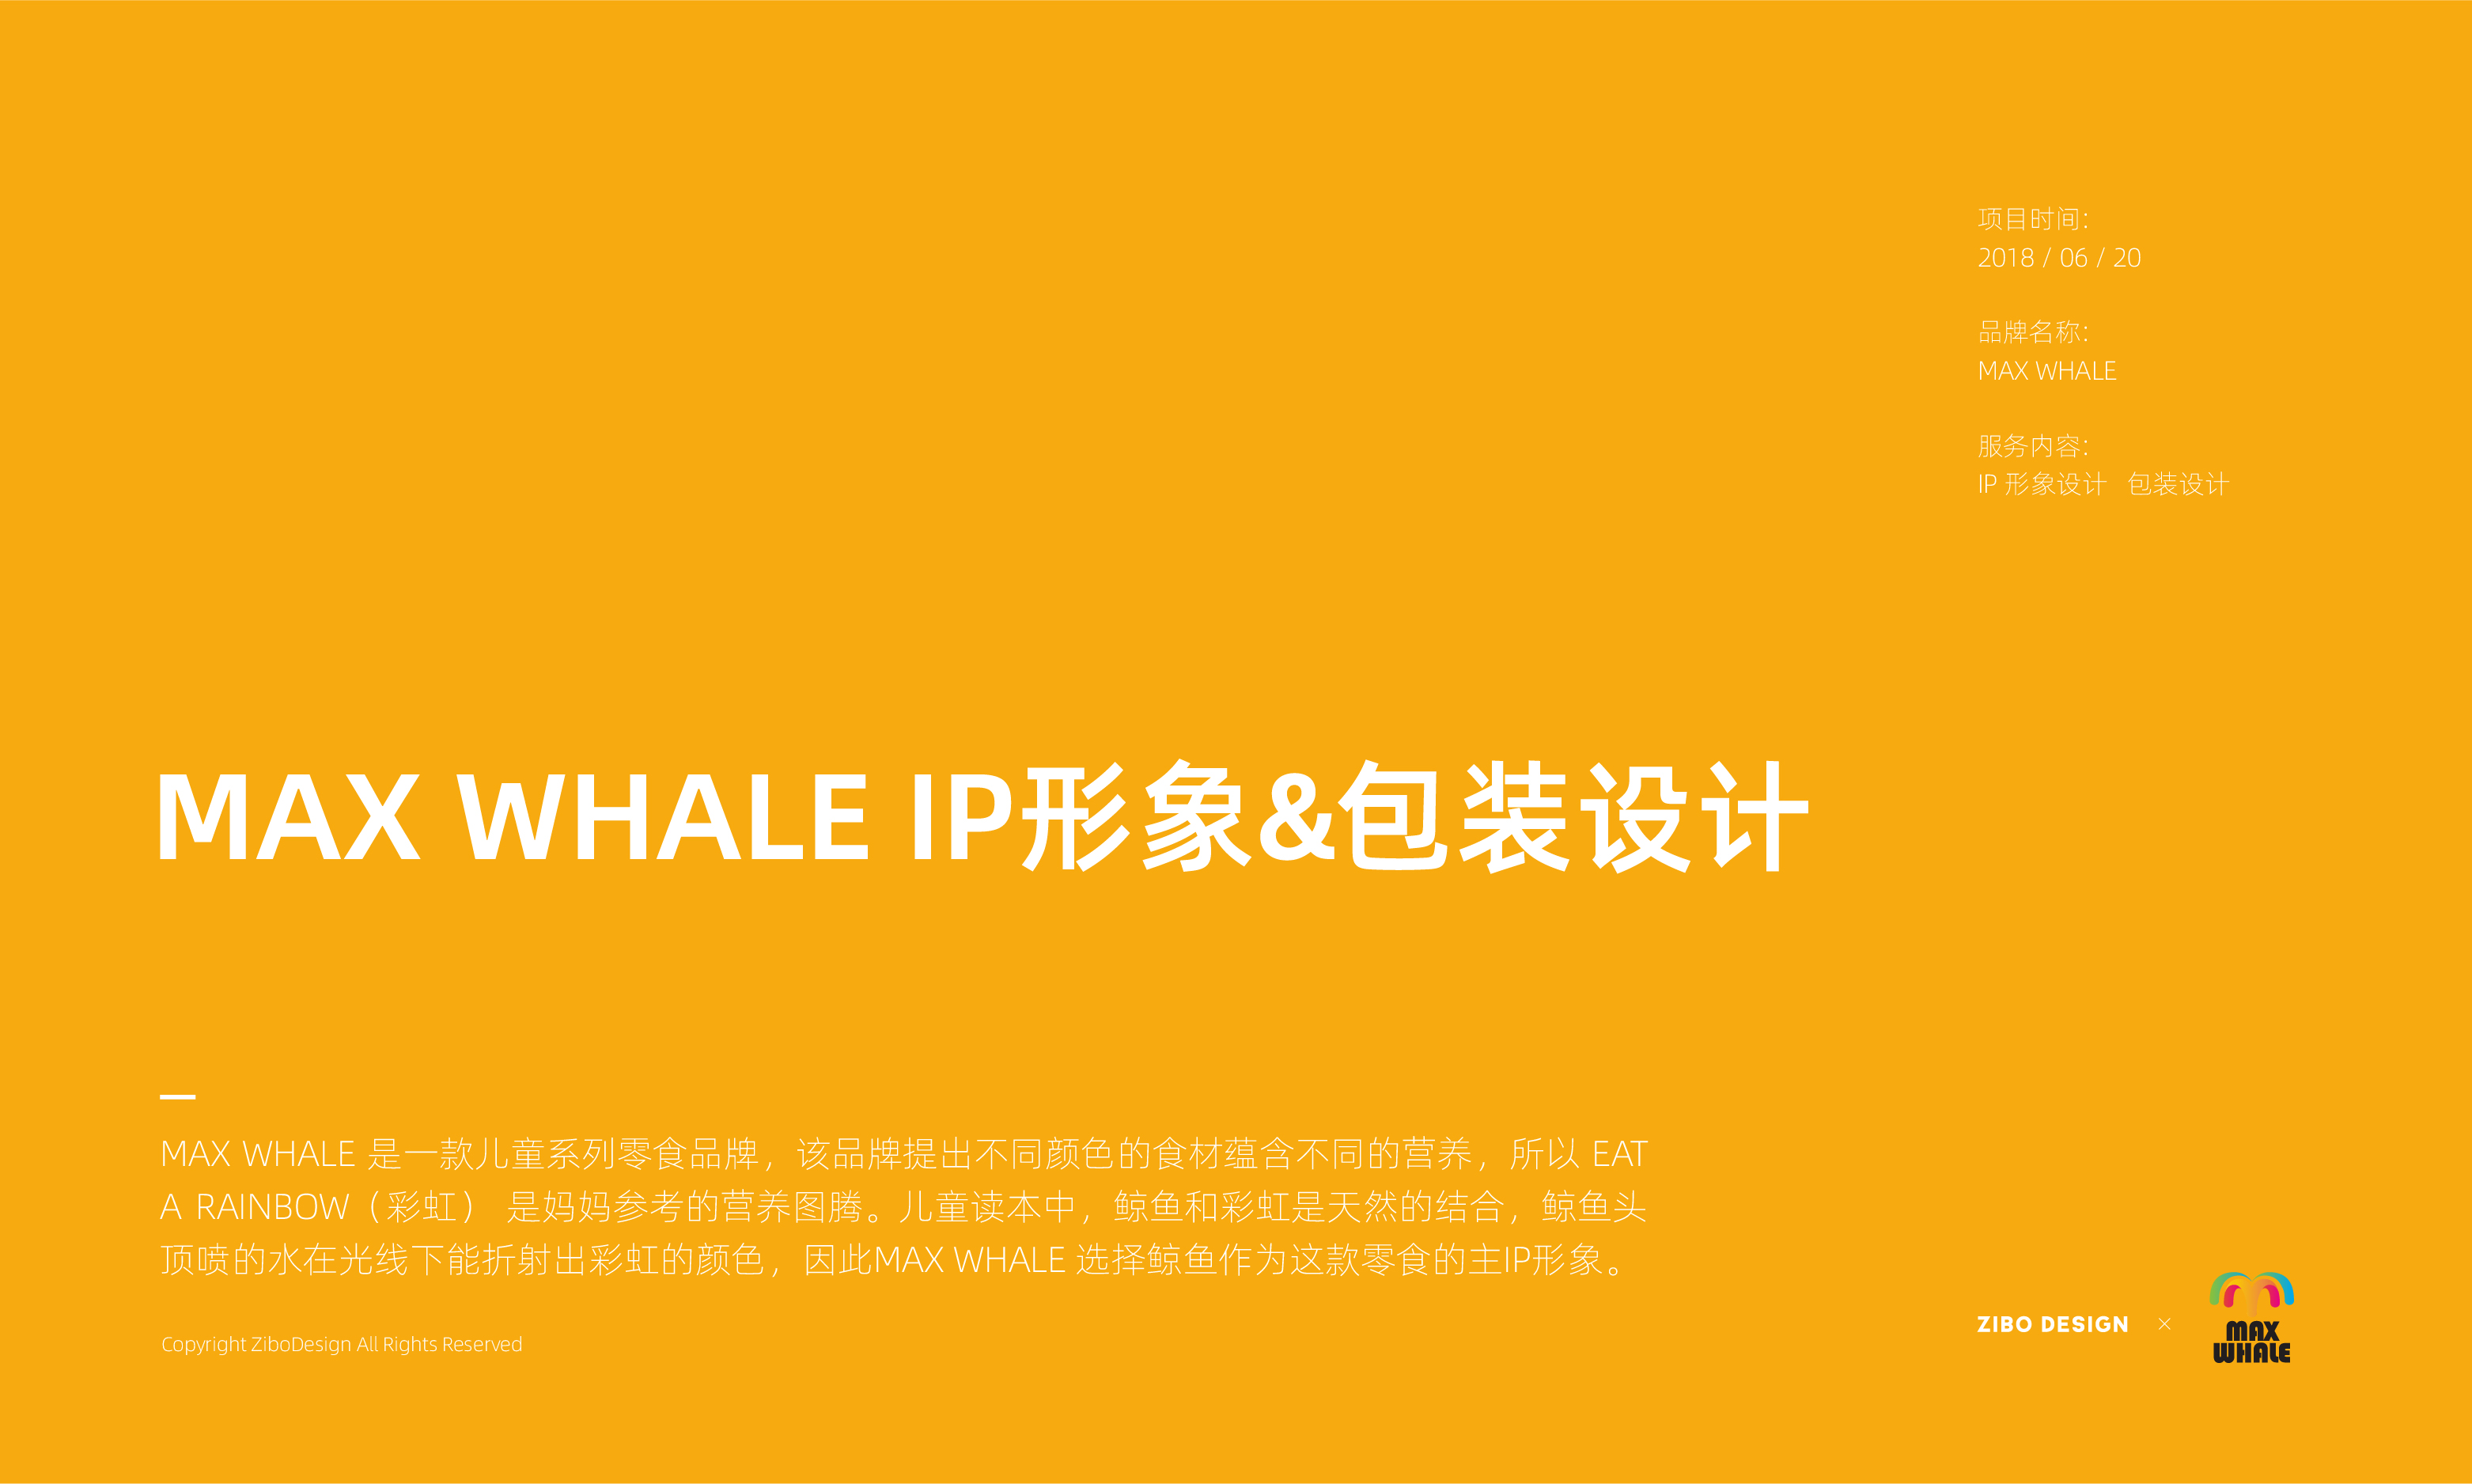 max whale ip形象设计 包装设计